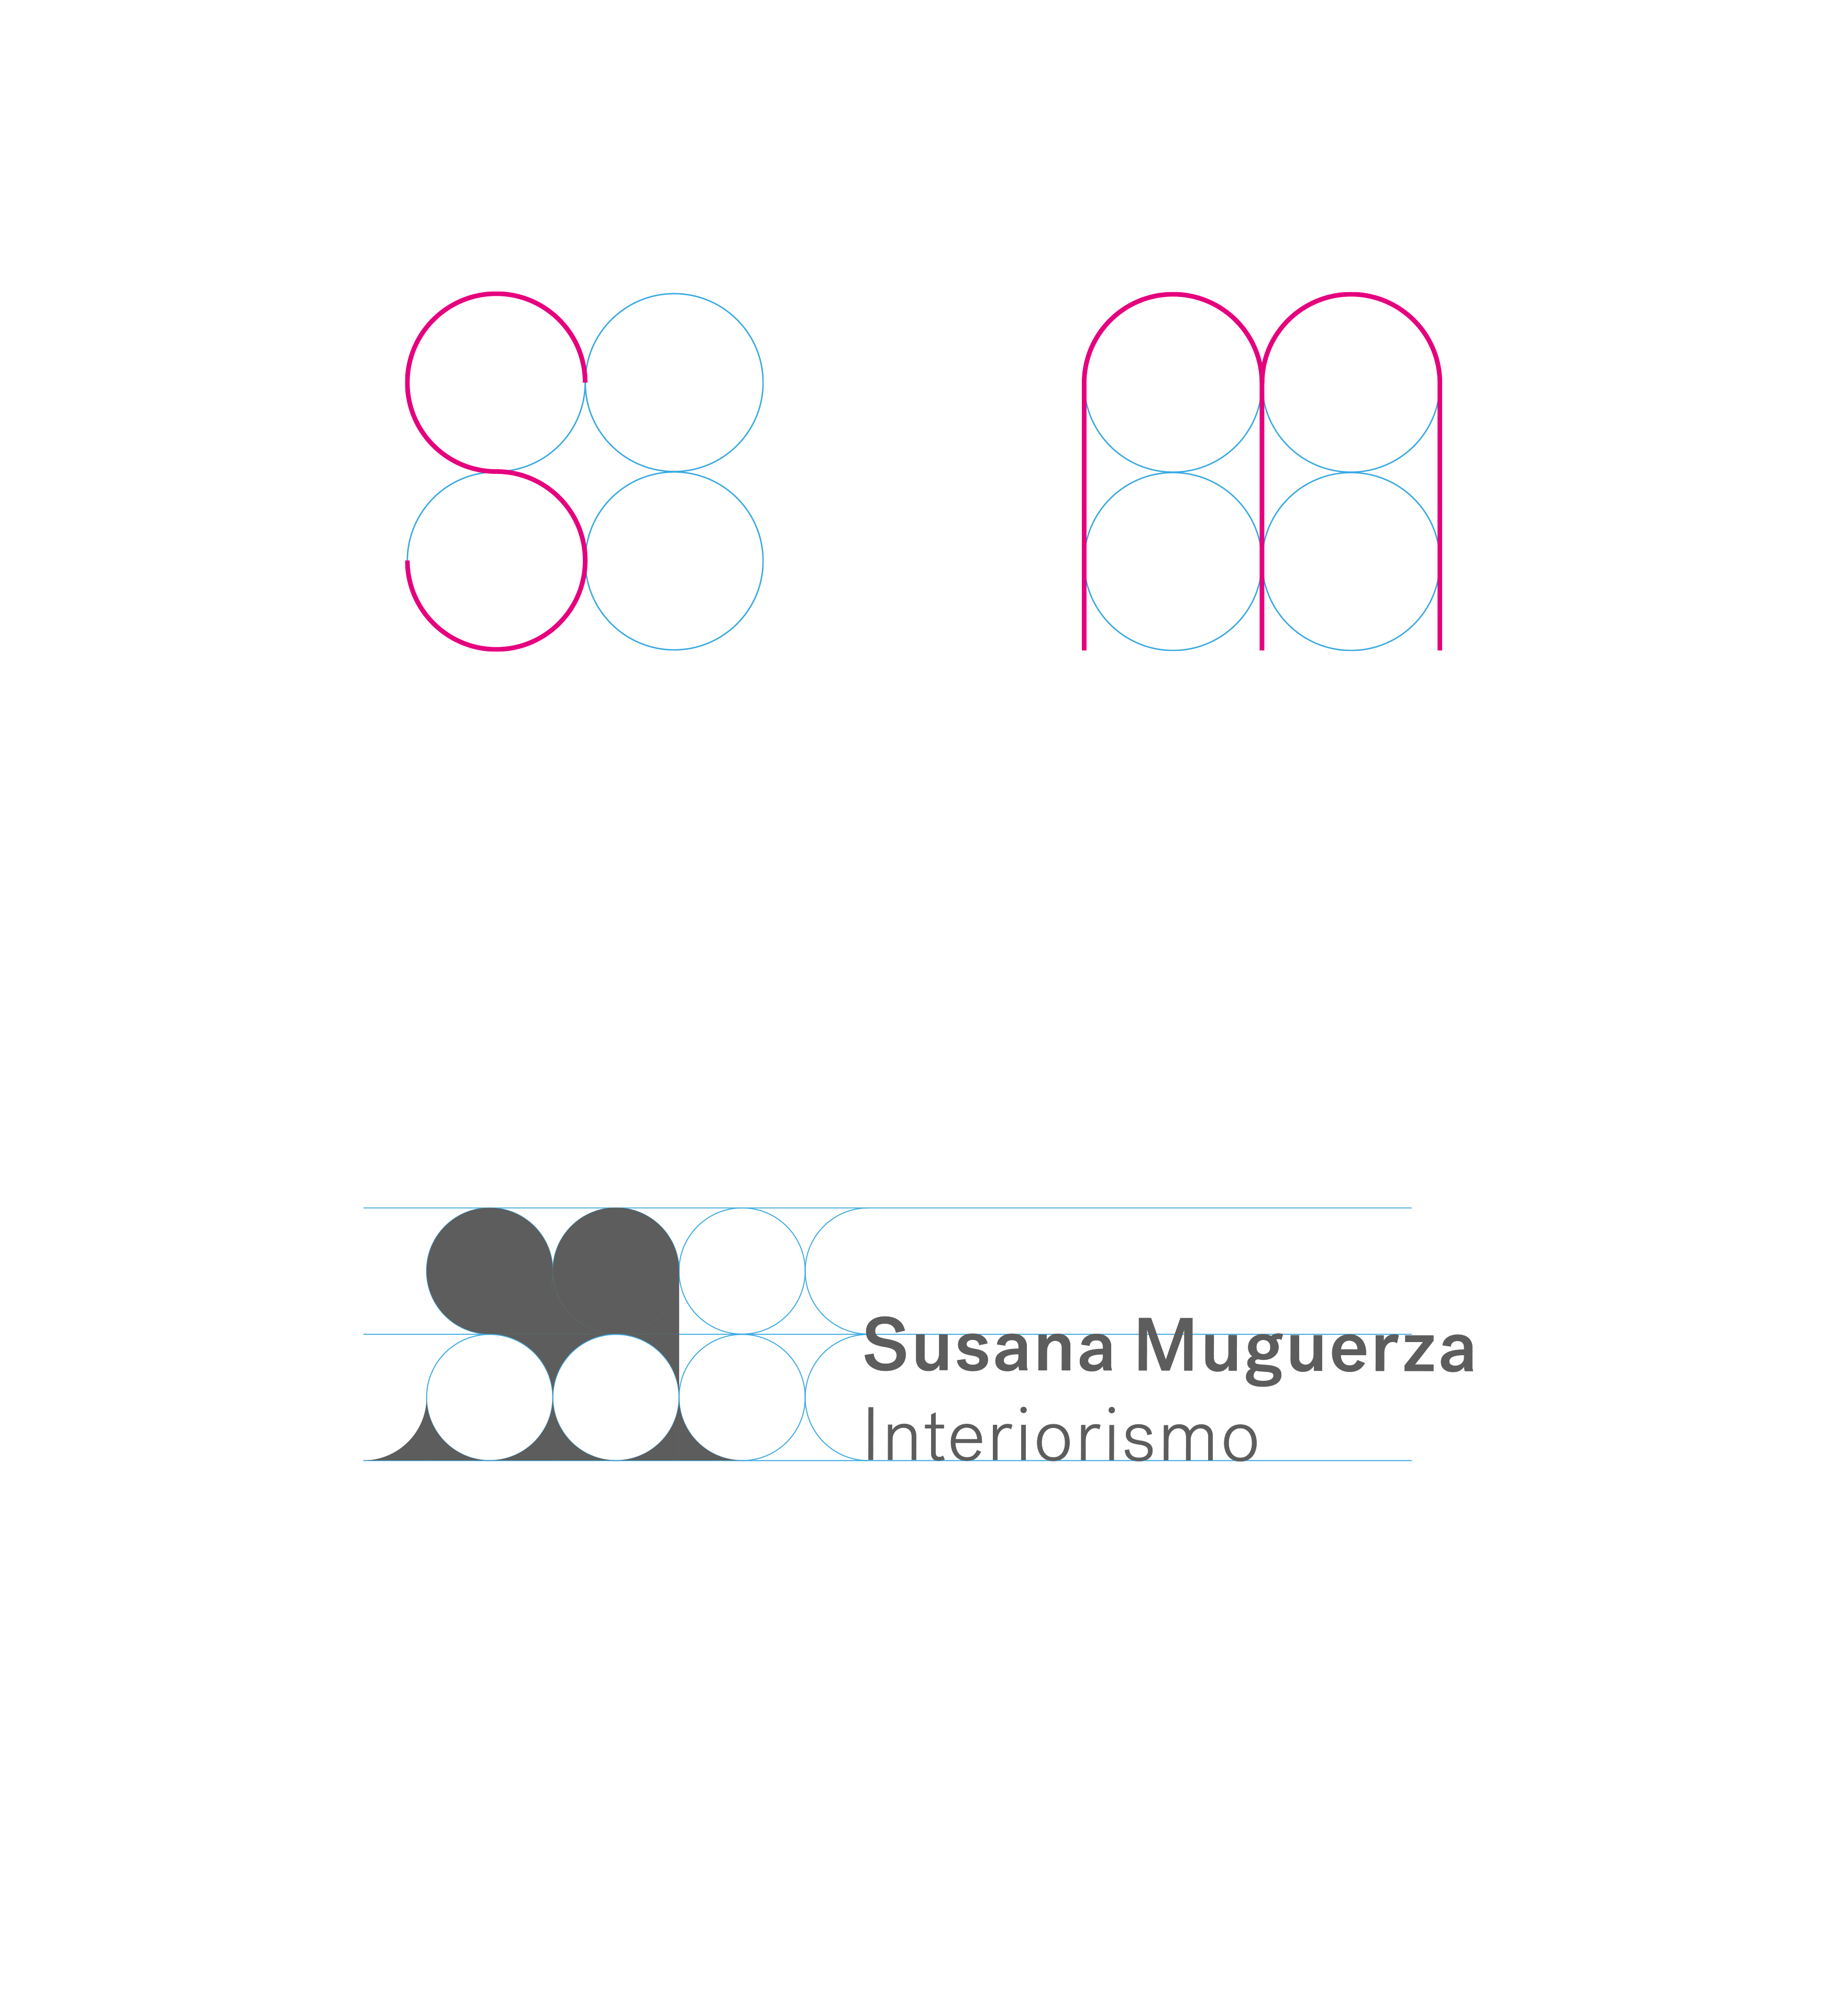 Susana Muguerza Interiorismo by Calderón Estudio - Creative Work - $i